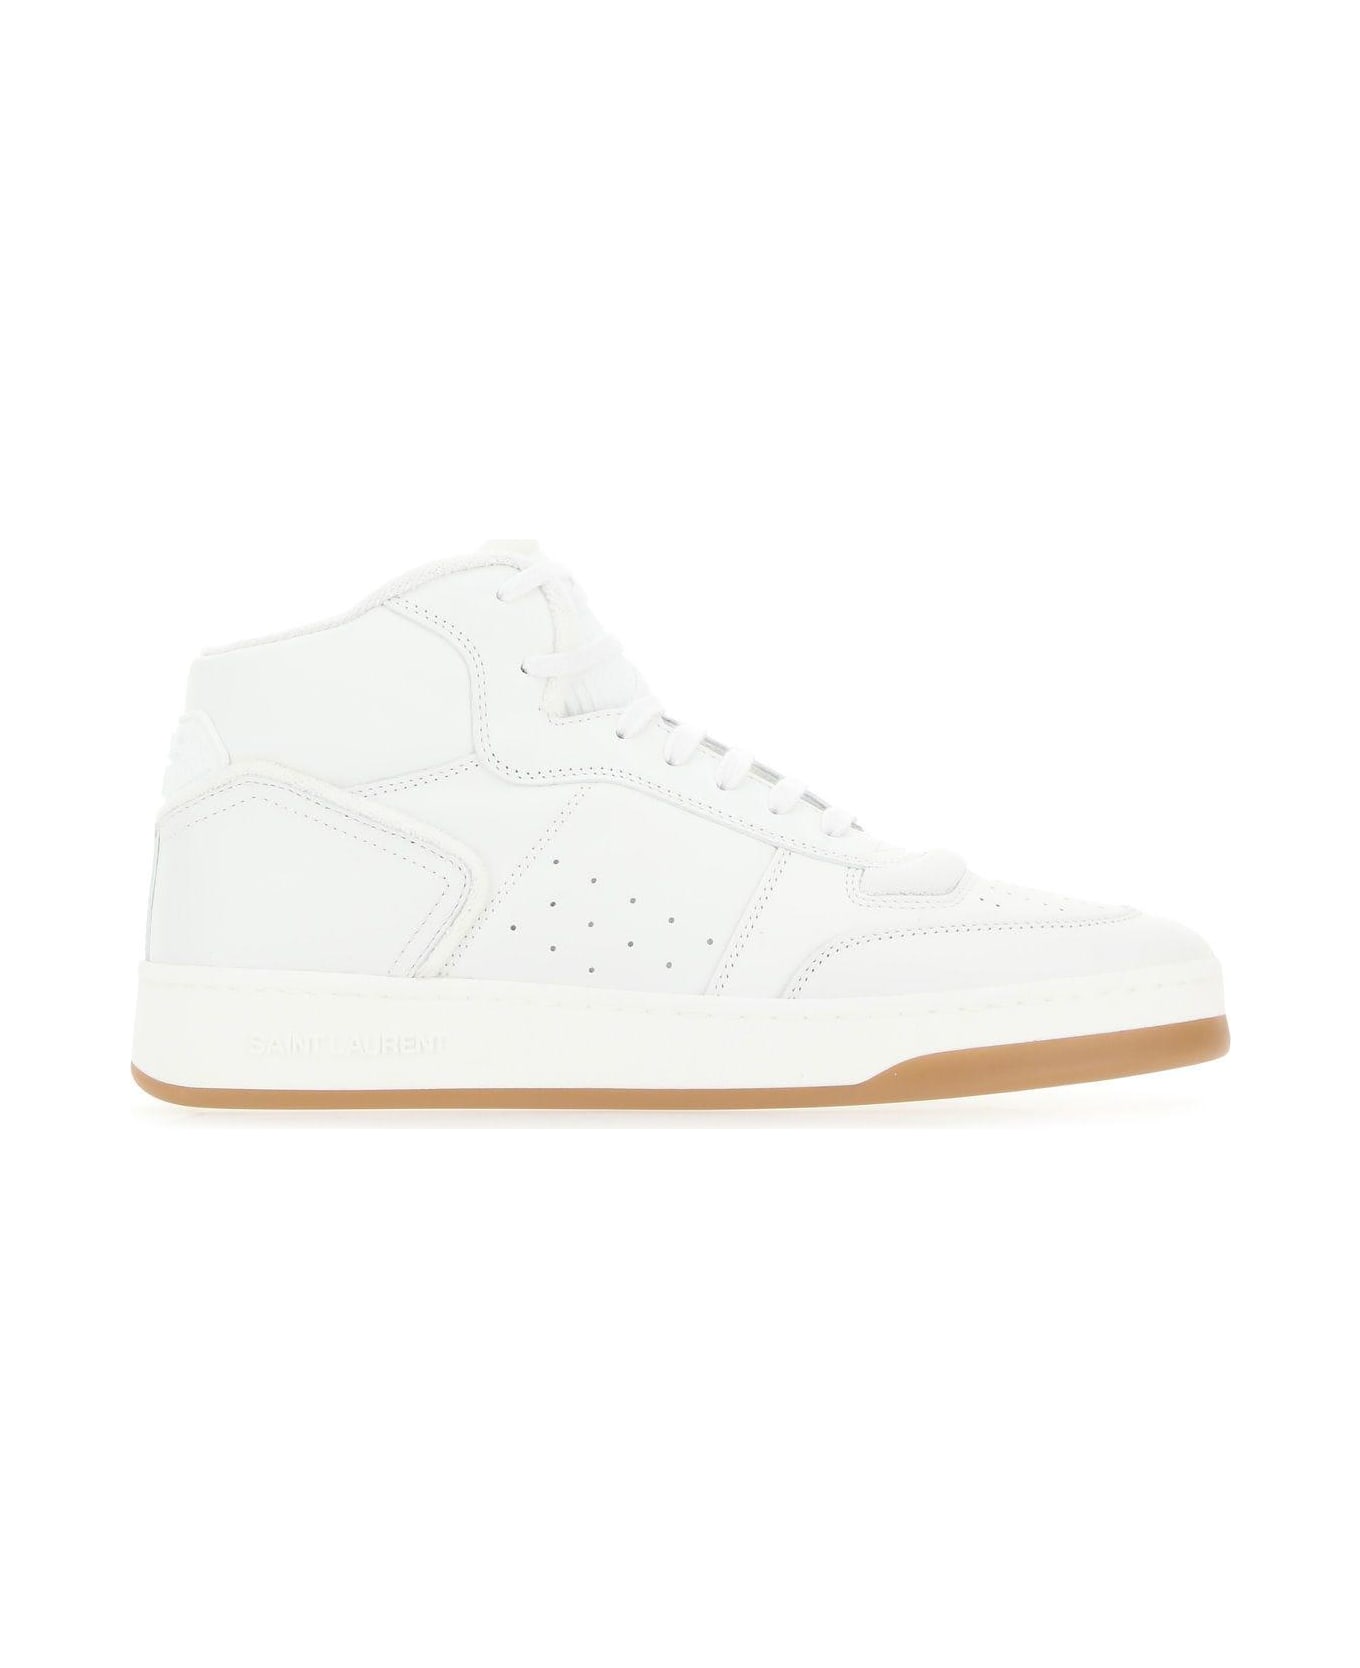 Saint Laurent Sl/80 Sneakers - White